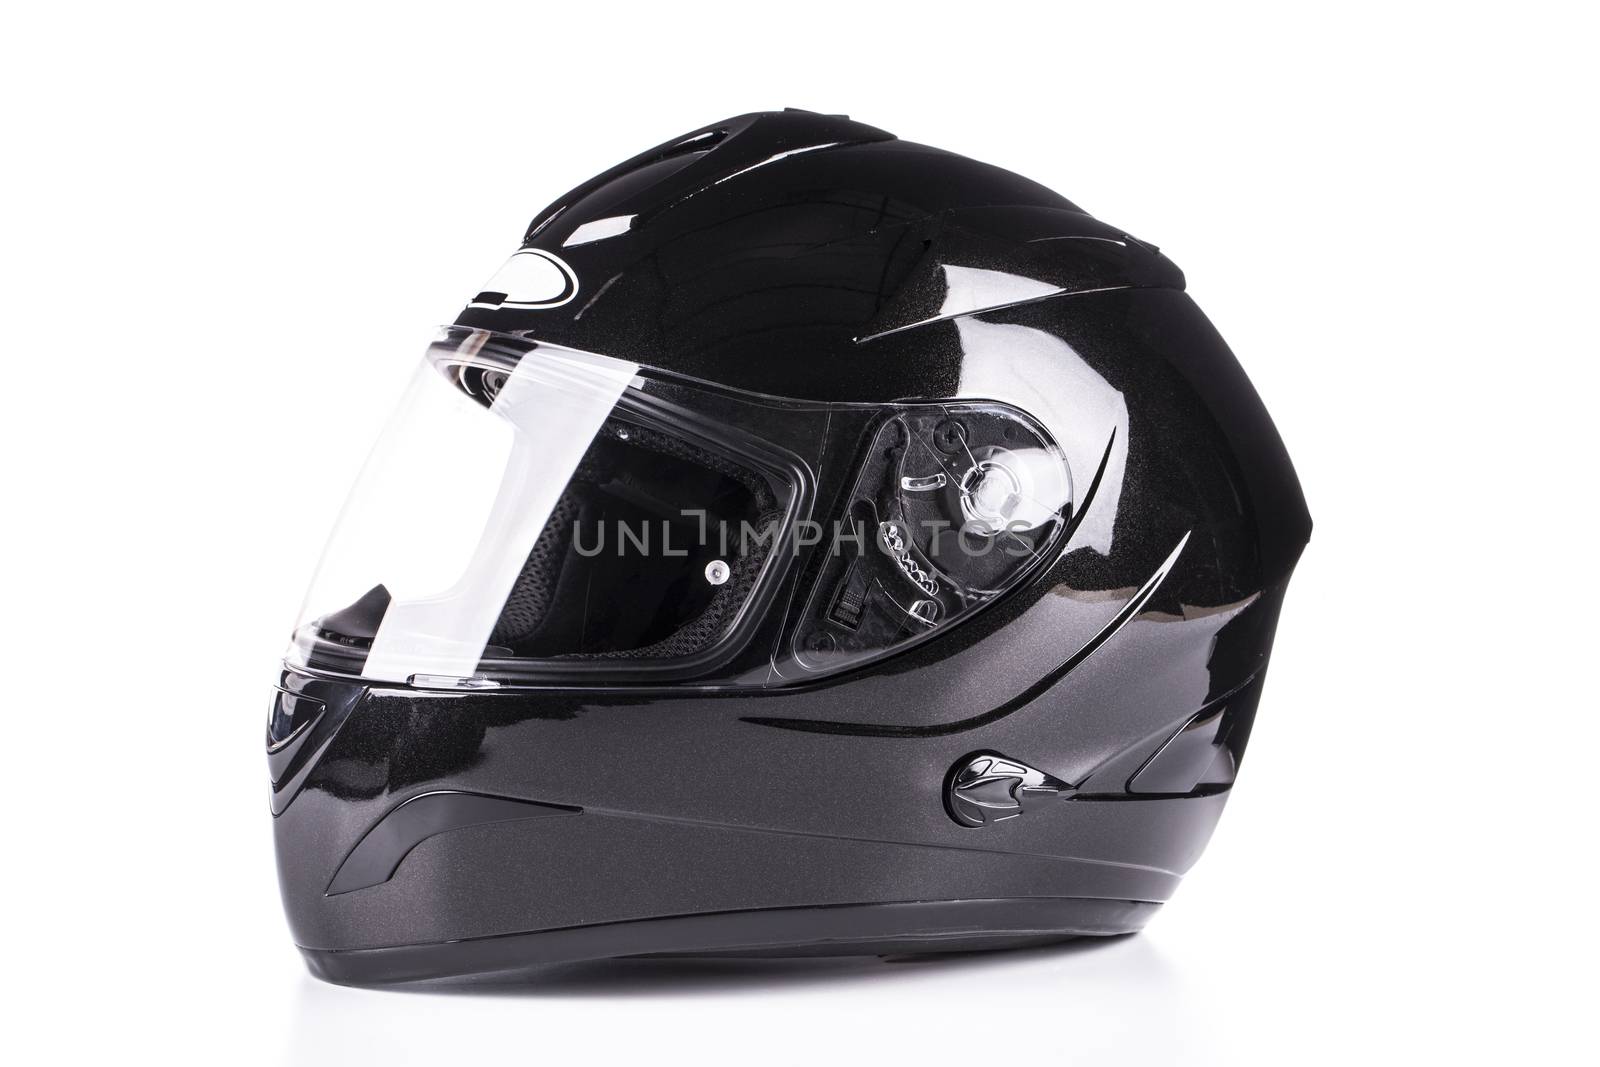 Black helmet Isolated on white background